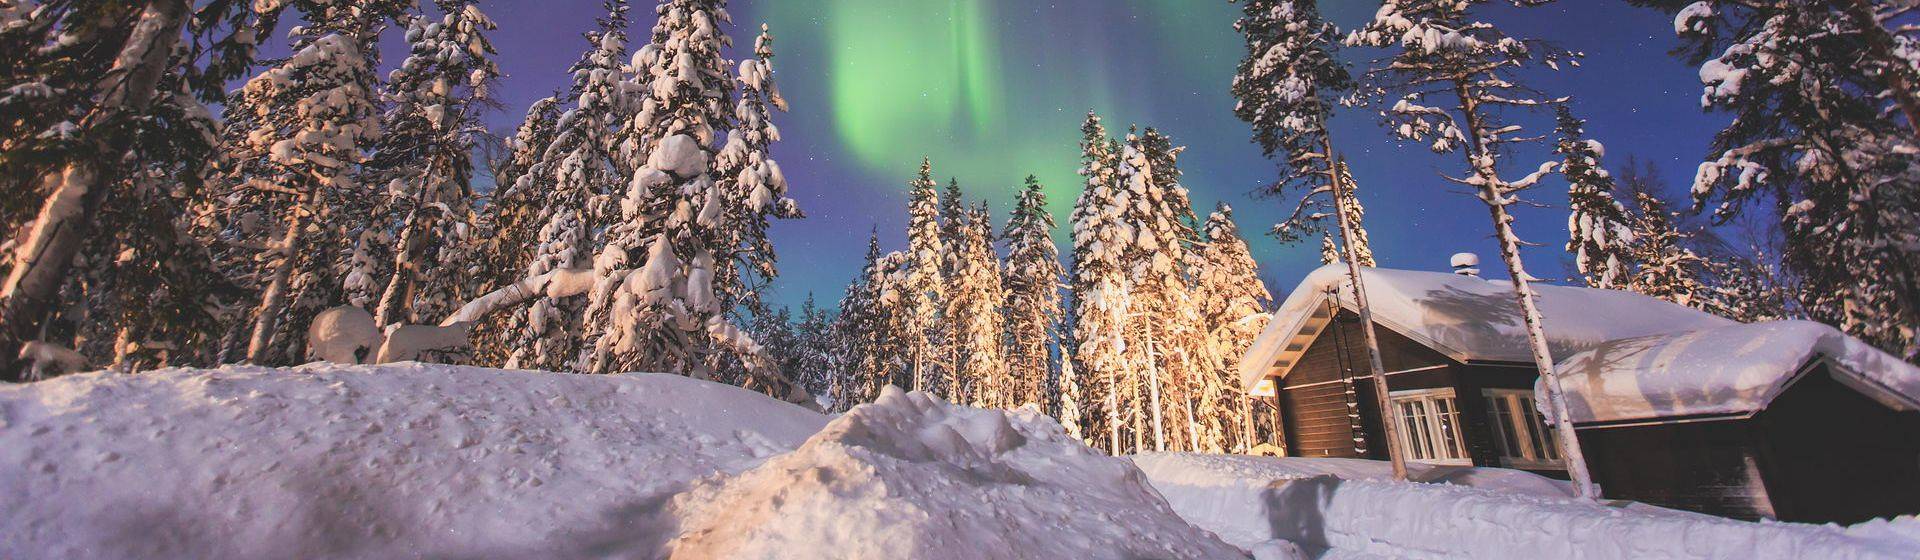 Holidays to Lapland Image